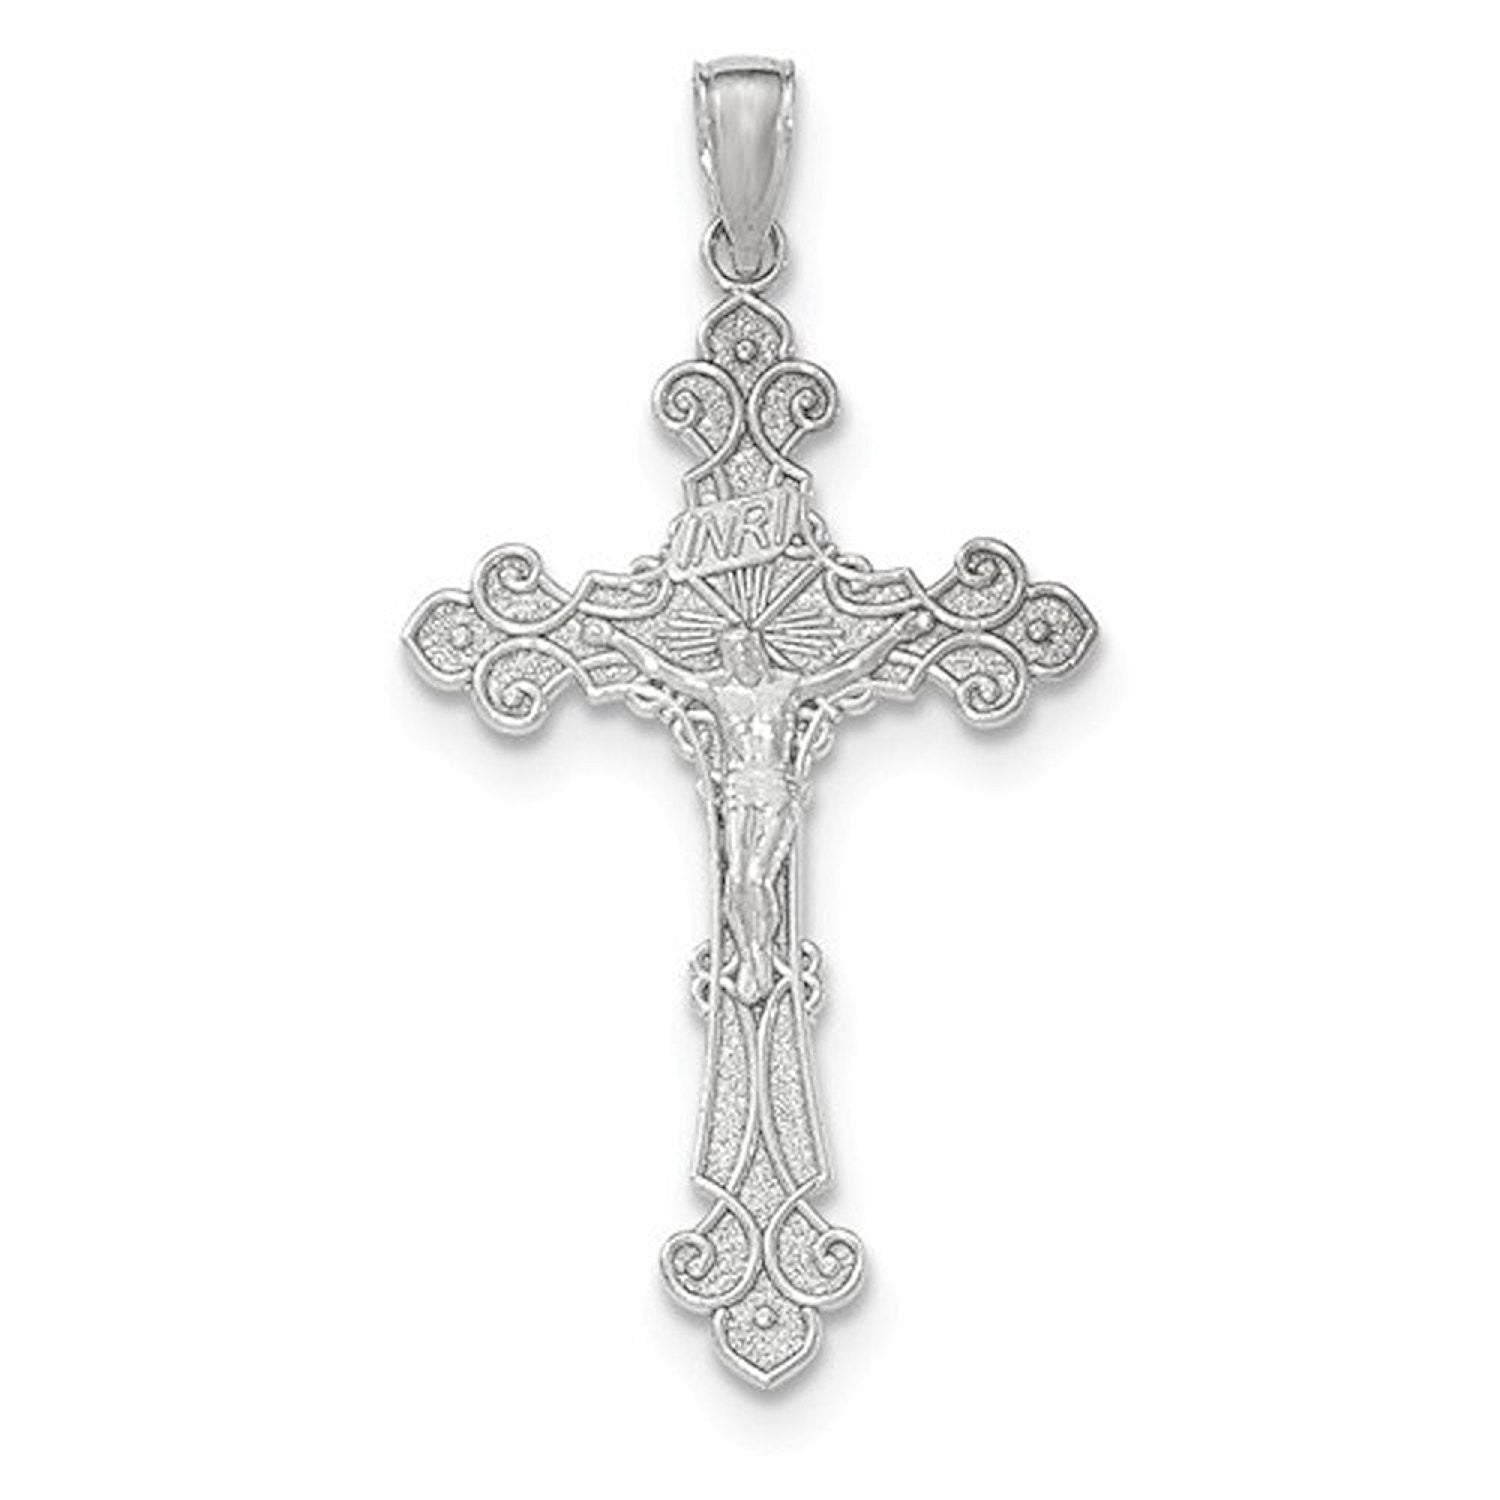 14k White Gold INRI Crucifix Cross Pendant Charm